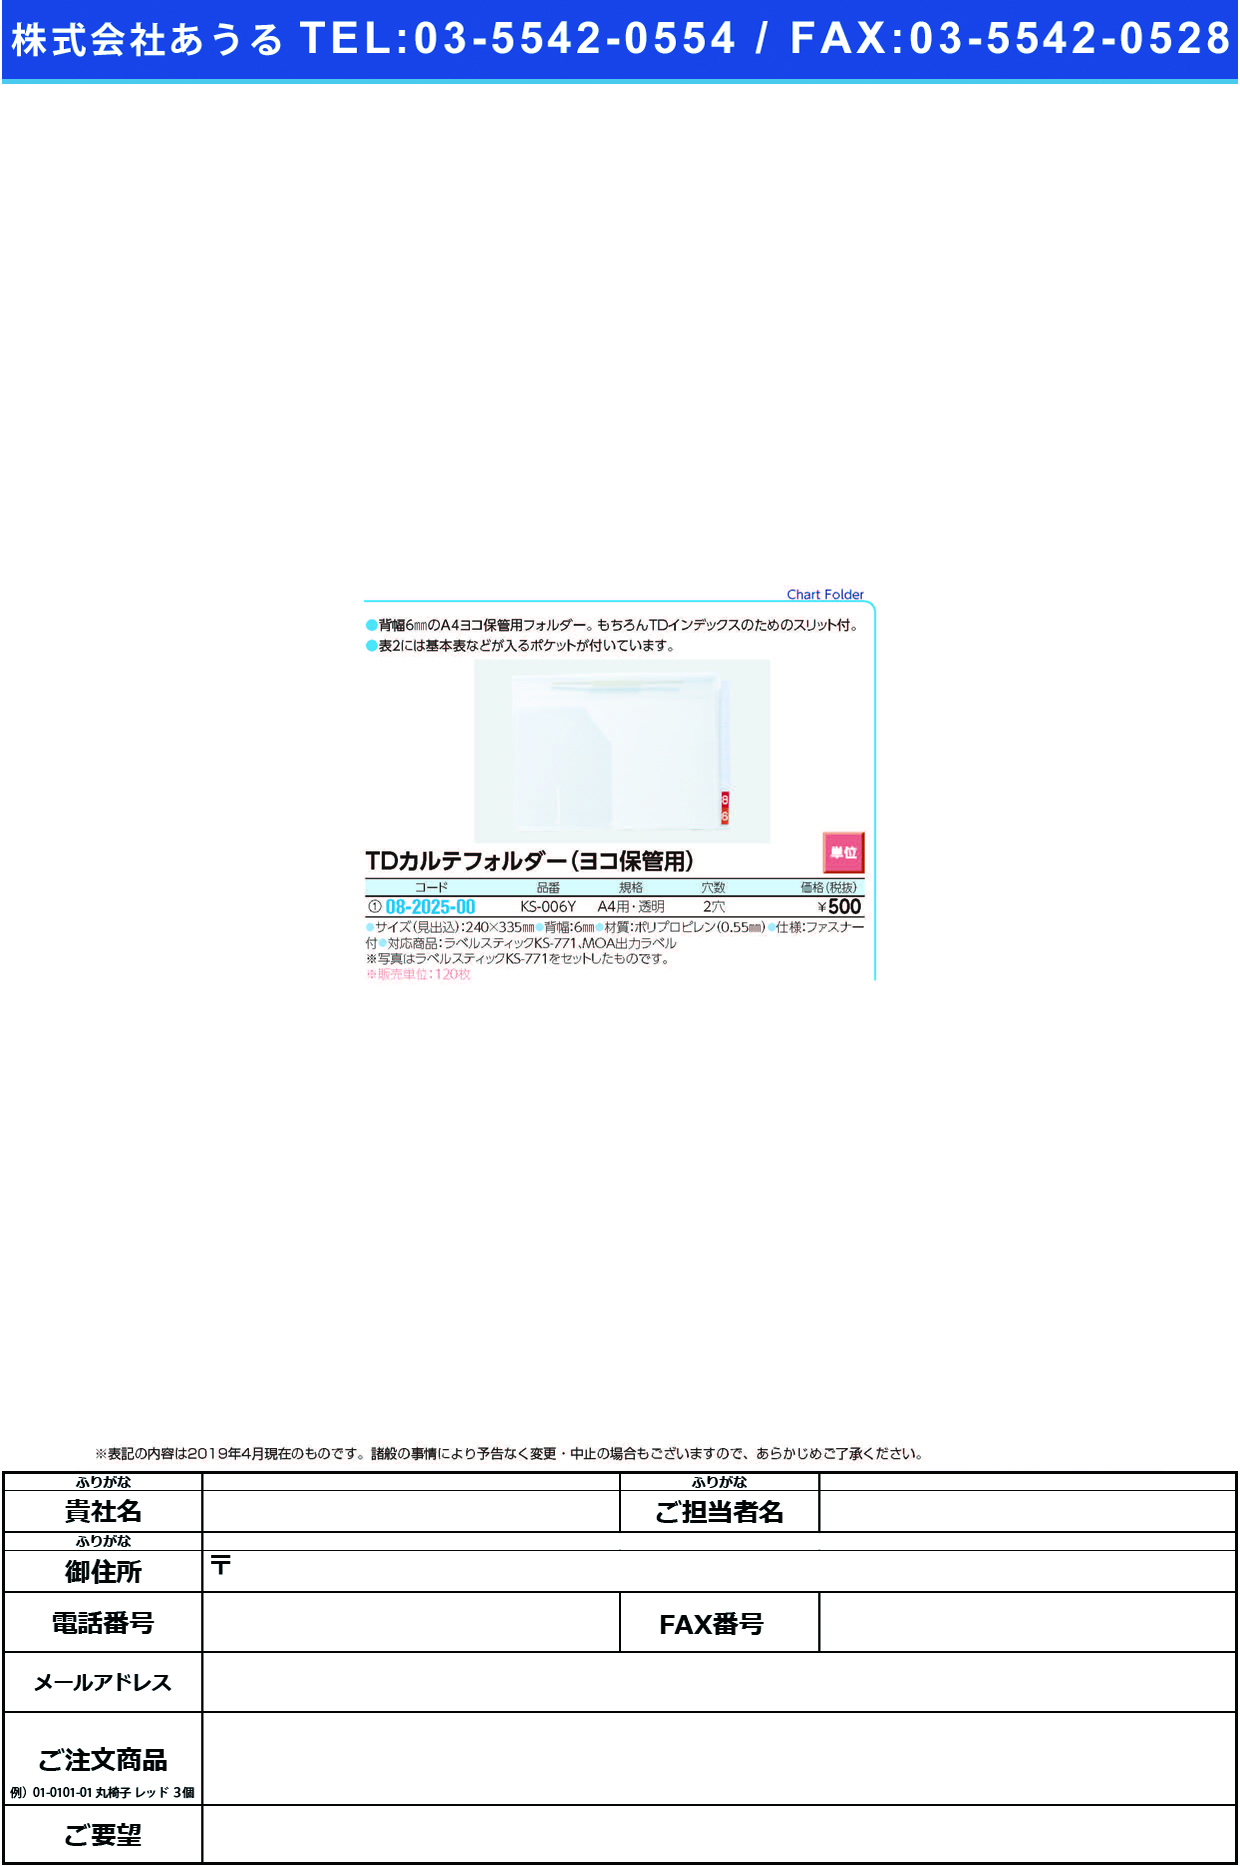 (08-2025-00)ＴＤカルテバインダー（Ａ４横保管用） KS-006Y(ﾄｳﾒｲ)2ｹﾂ TDｶﾙﾃﾊﾞｲﾝﾀﾞｰ(ケルン)【120冊単位】【2019年カタログ商品】